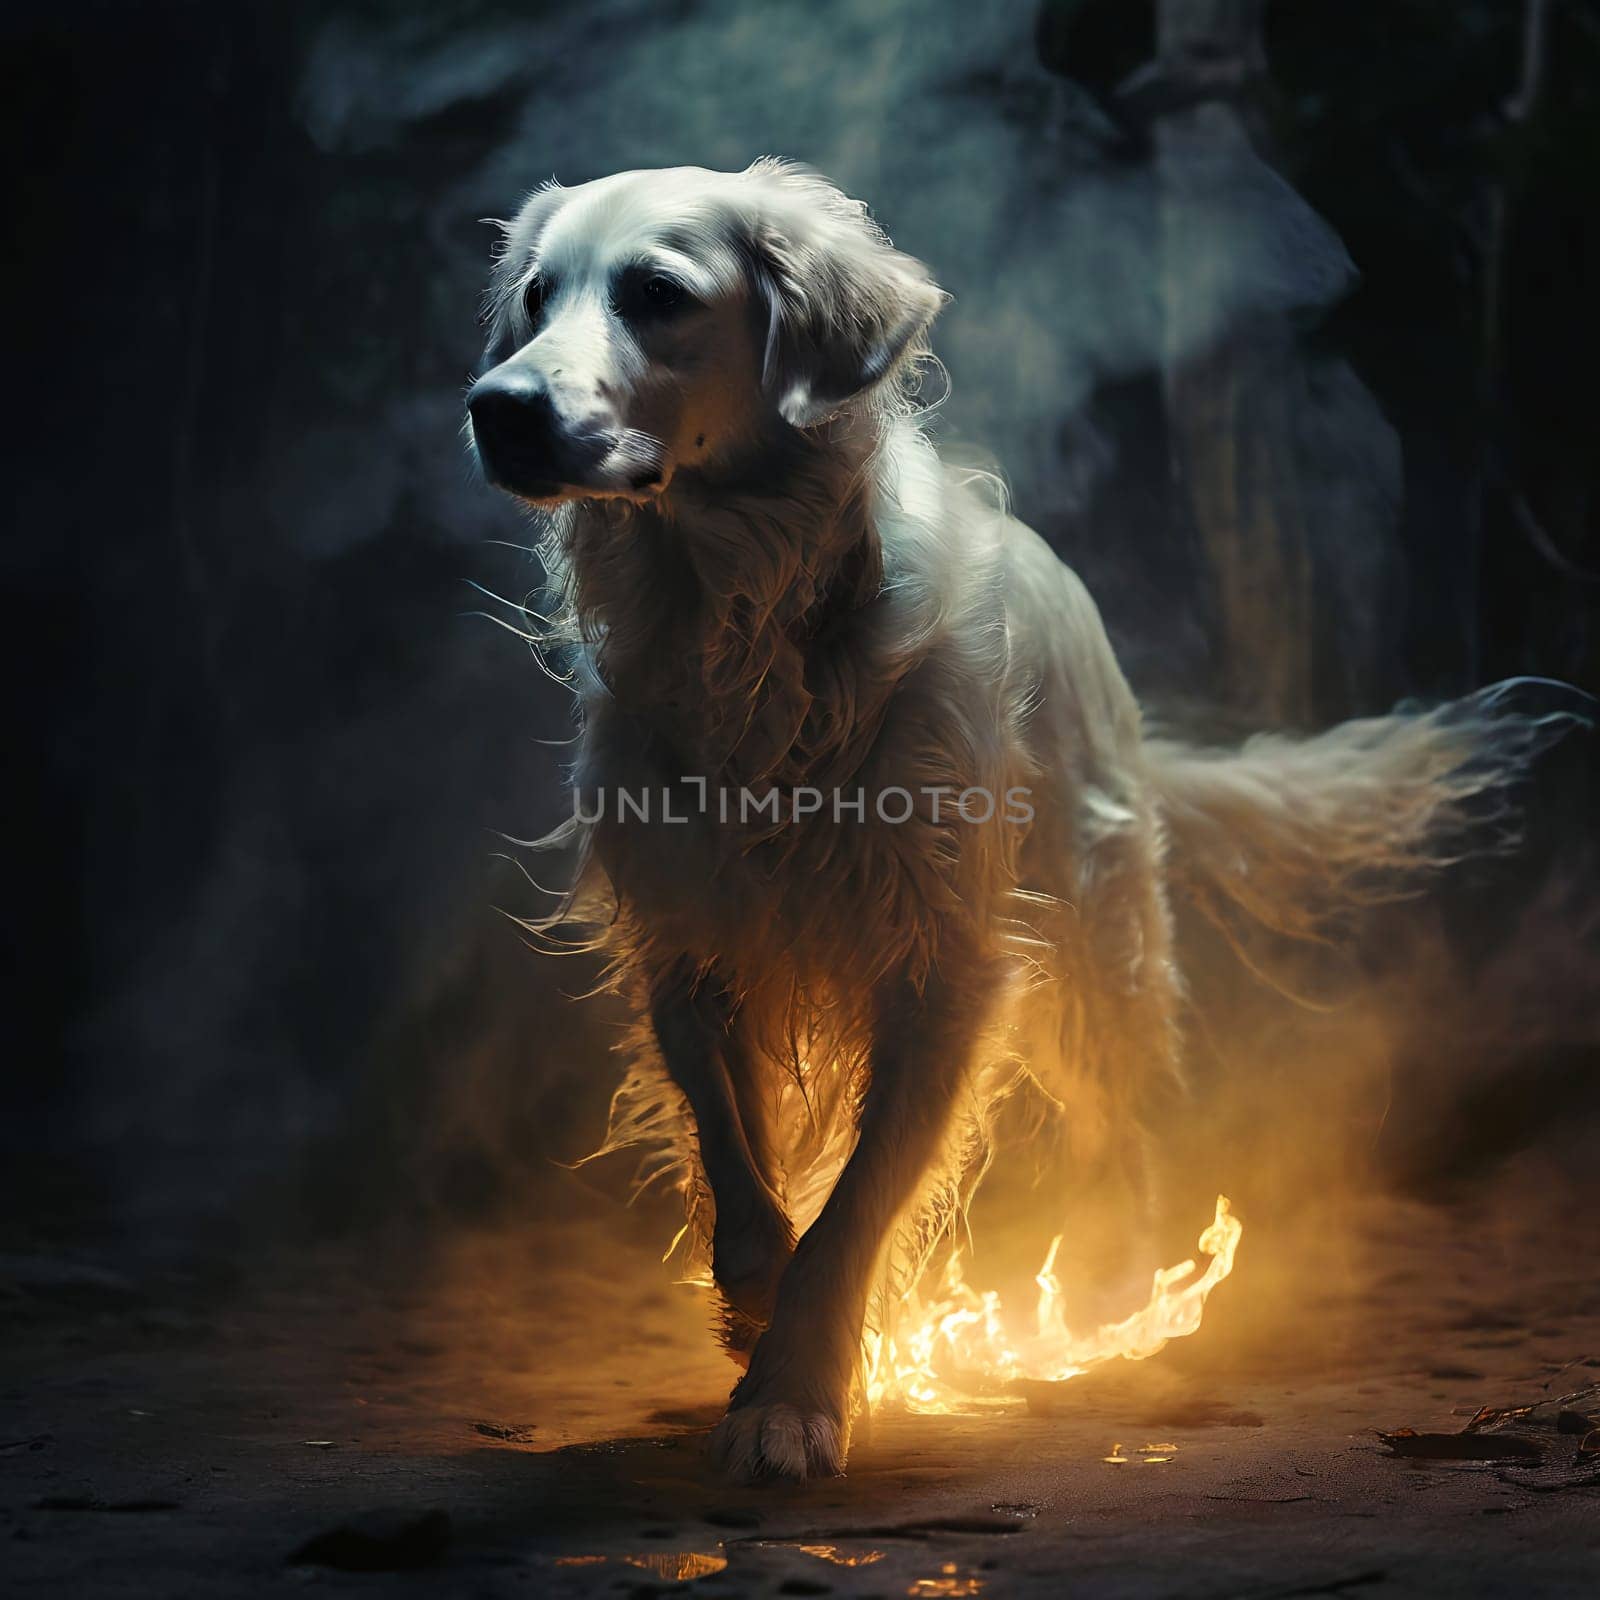 A ghostly white dog runs through the fire by VeronikaAngo